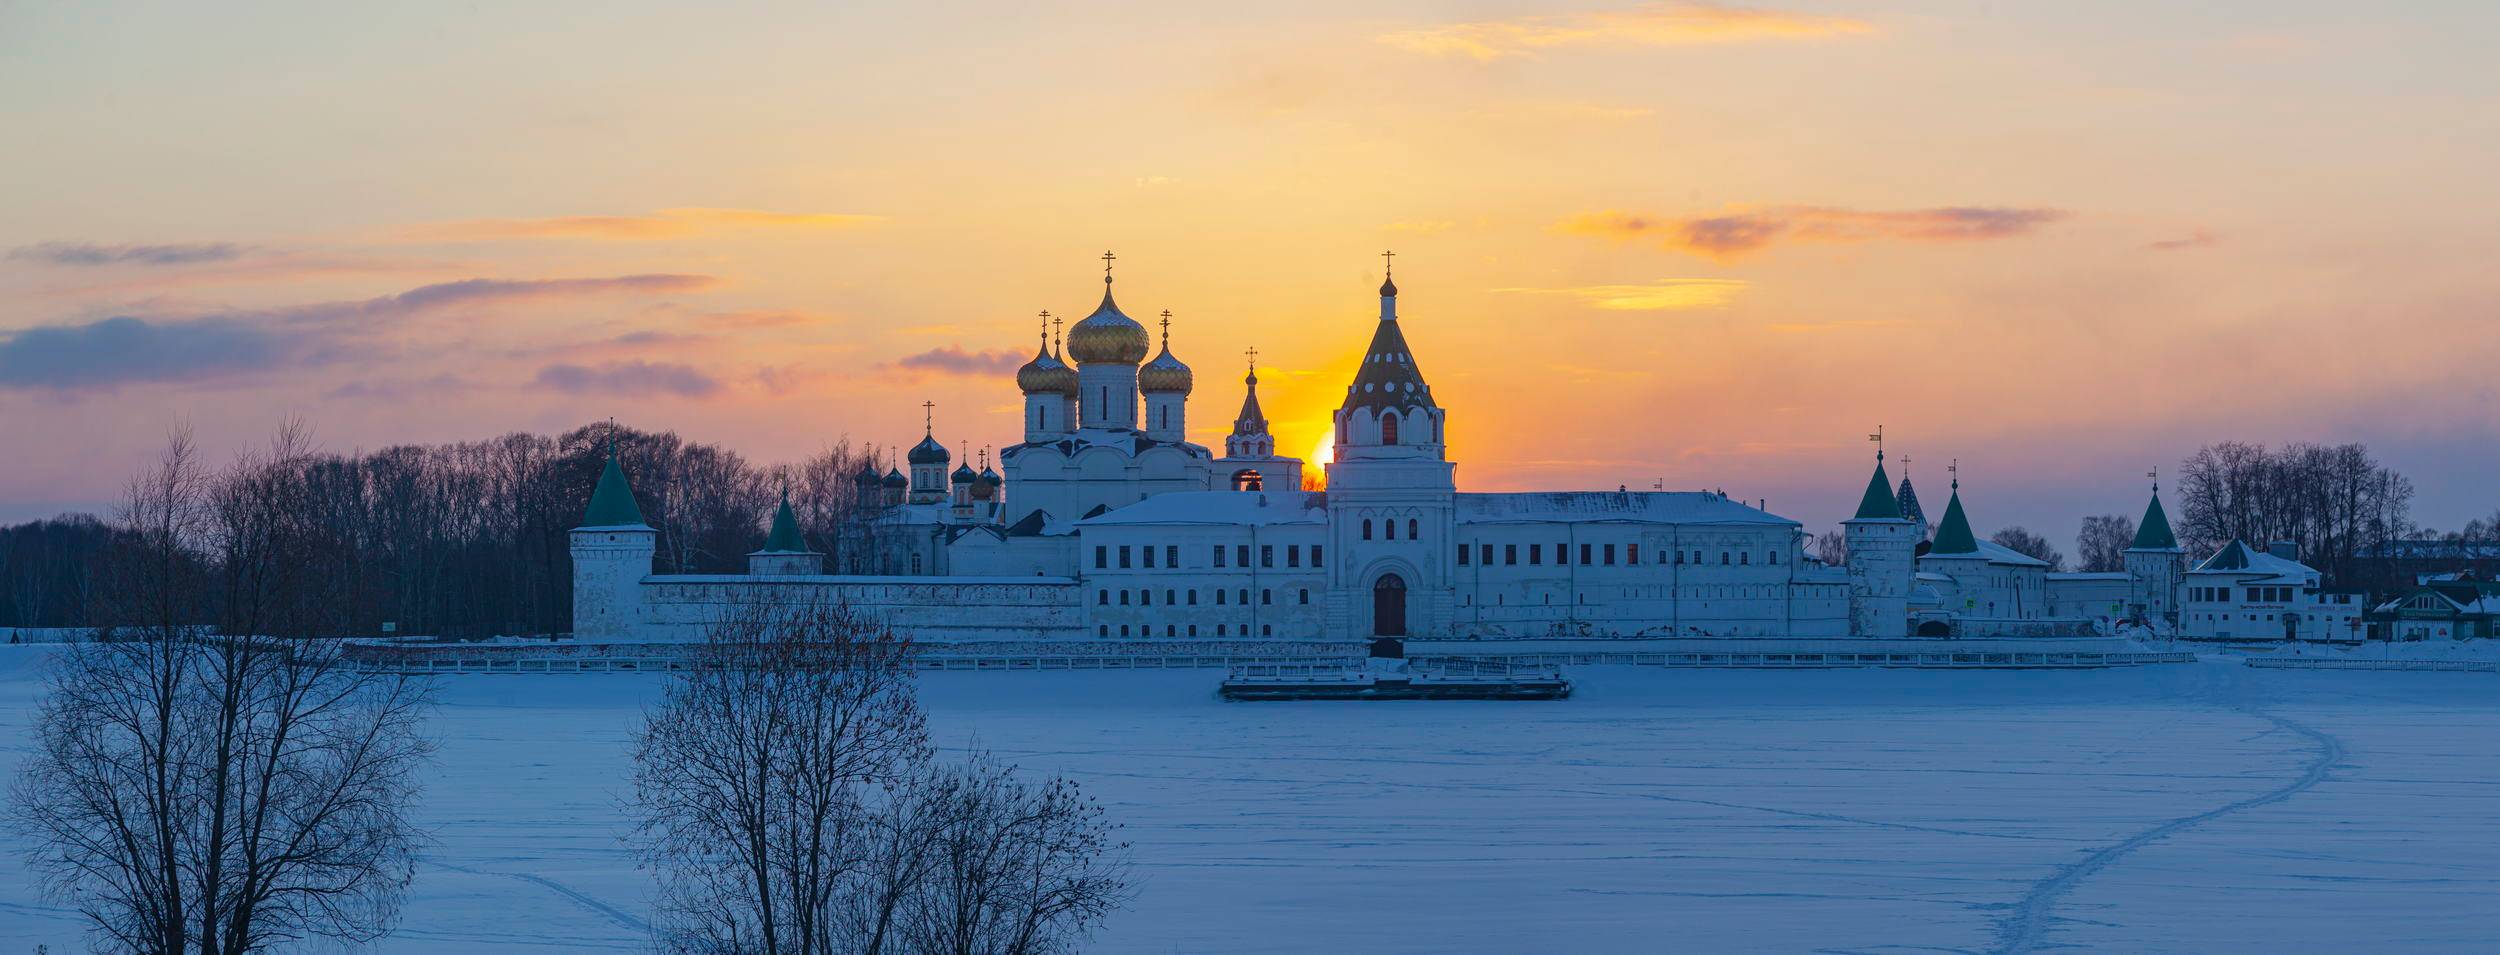 Ipatiev Monastery at sunset
